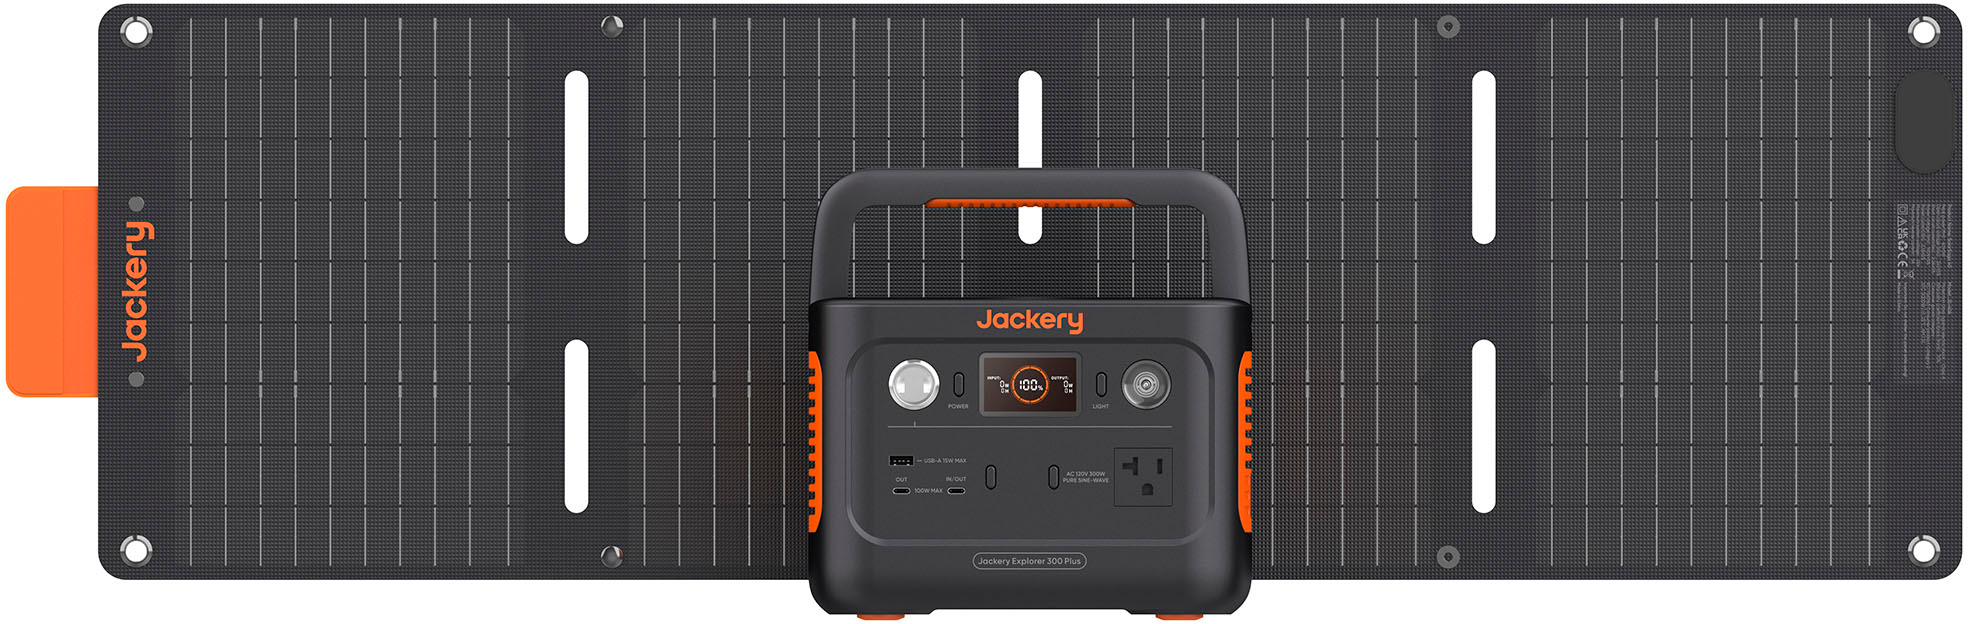 Jackery Explorer 300 Plus Portable Power Solar Generator + 40W Solar Panel  Black JSG-0304B - Best Buy